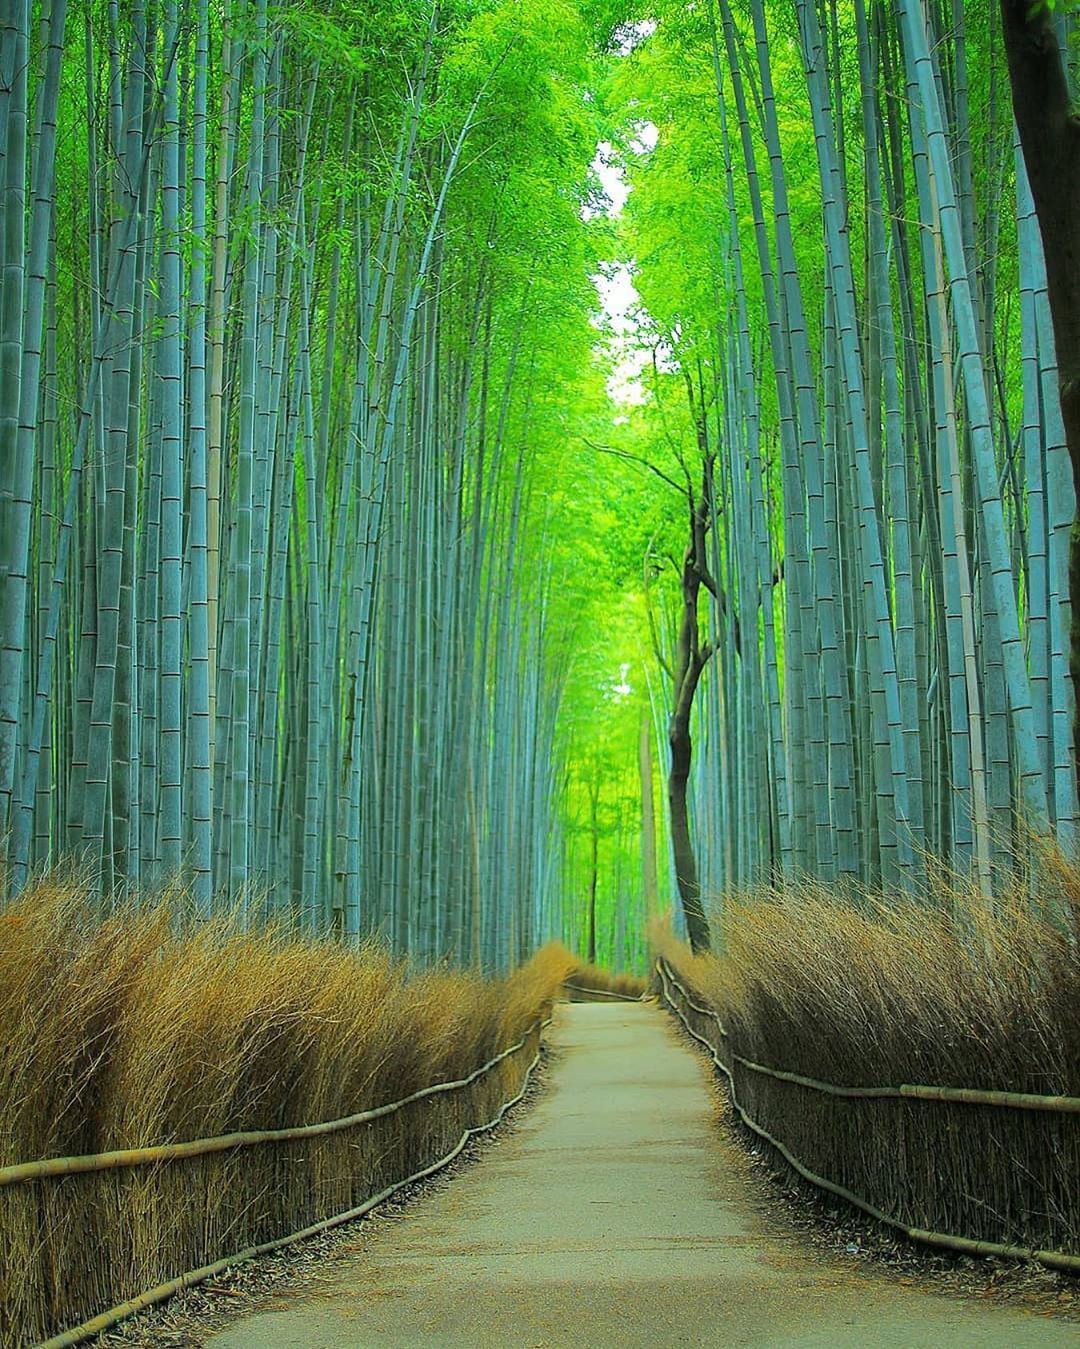 Retrip Kyoto Retrip 京都観光 今回ご紹介するのは 京都 嵐山の 竹林の小径 竹林が並び 綺麗な 新緑の中で自然を満喫できるスポットです 夜の神秘的な景色も 昼の Wacoca Japan People Life Style